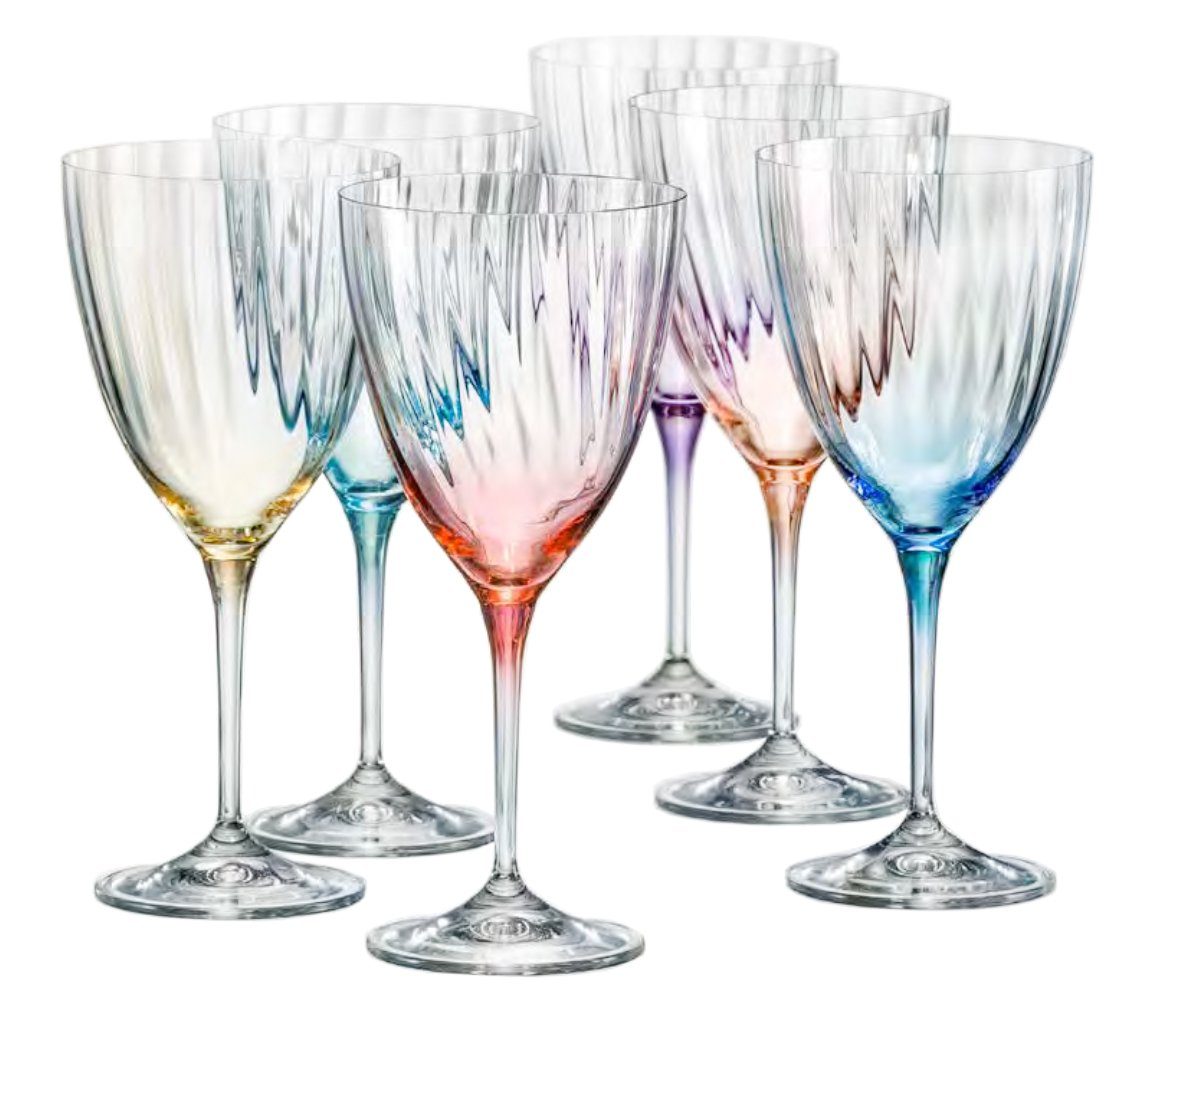 Kristallglas, ml 400 Optic mehrfarbig, Glanz Kristallglas, Kate 6er Rotweinglas Set, besondere Crystalex Rotweingläser